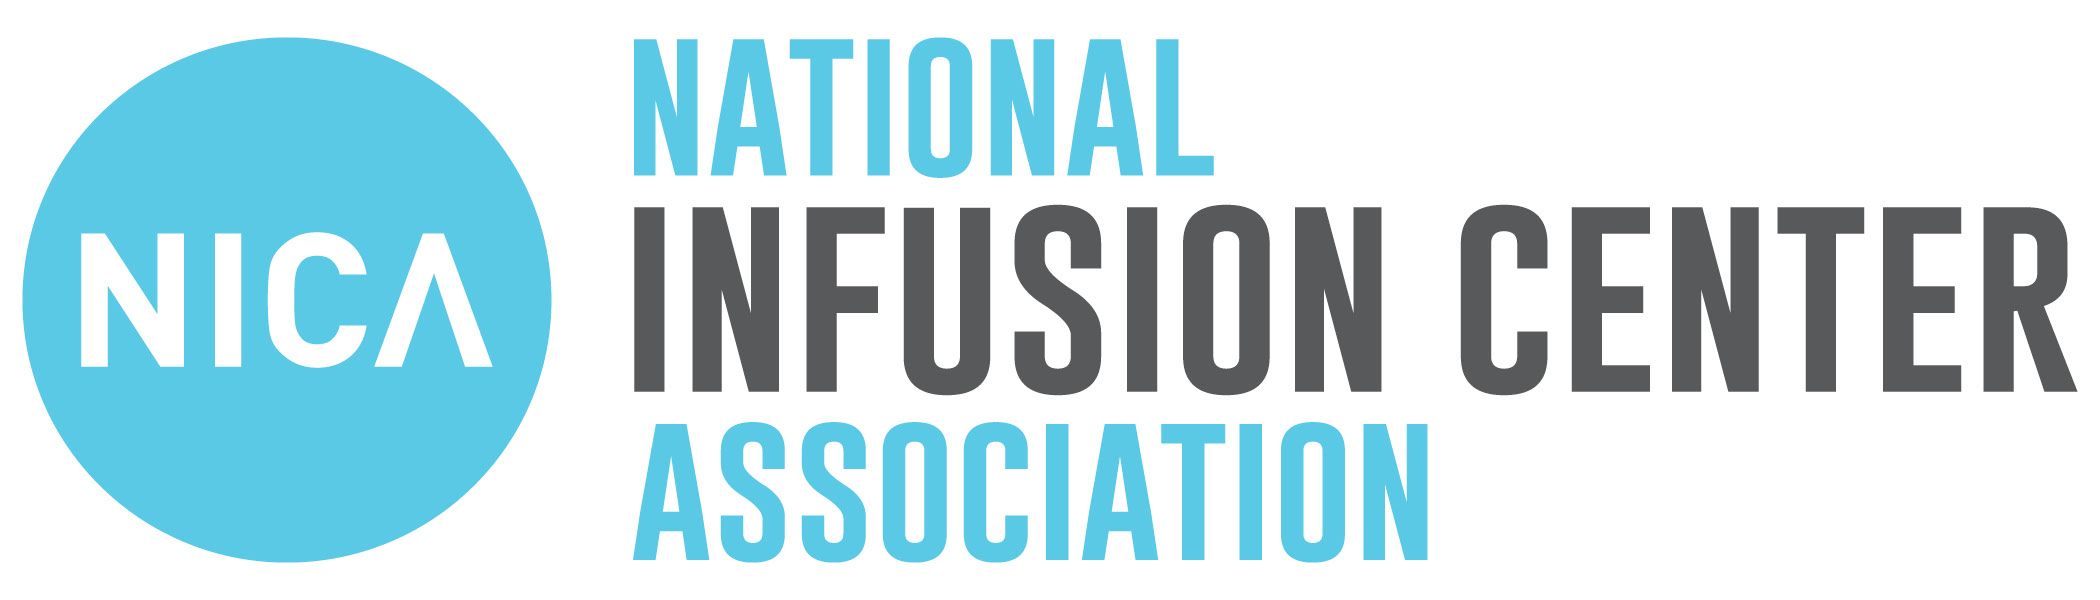 National Infusion Center Association (NICA) logo